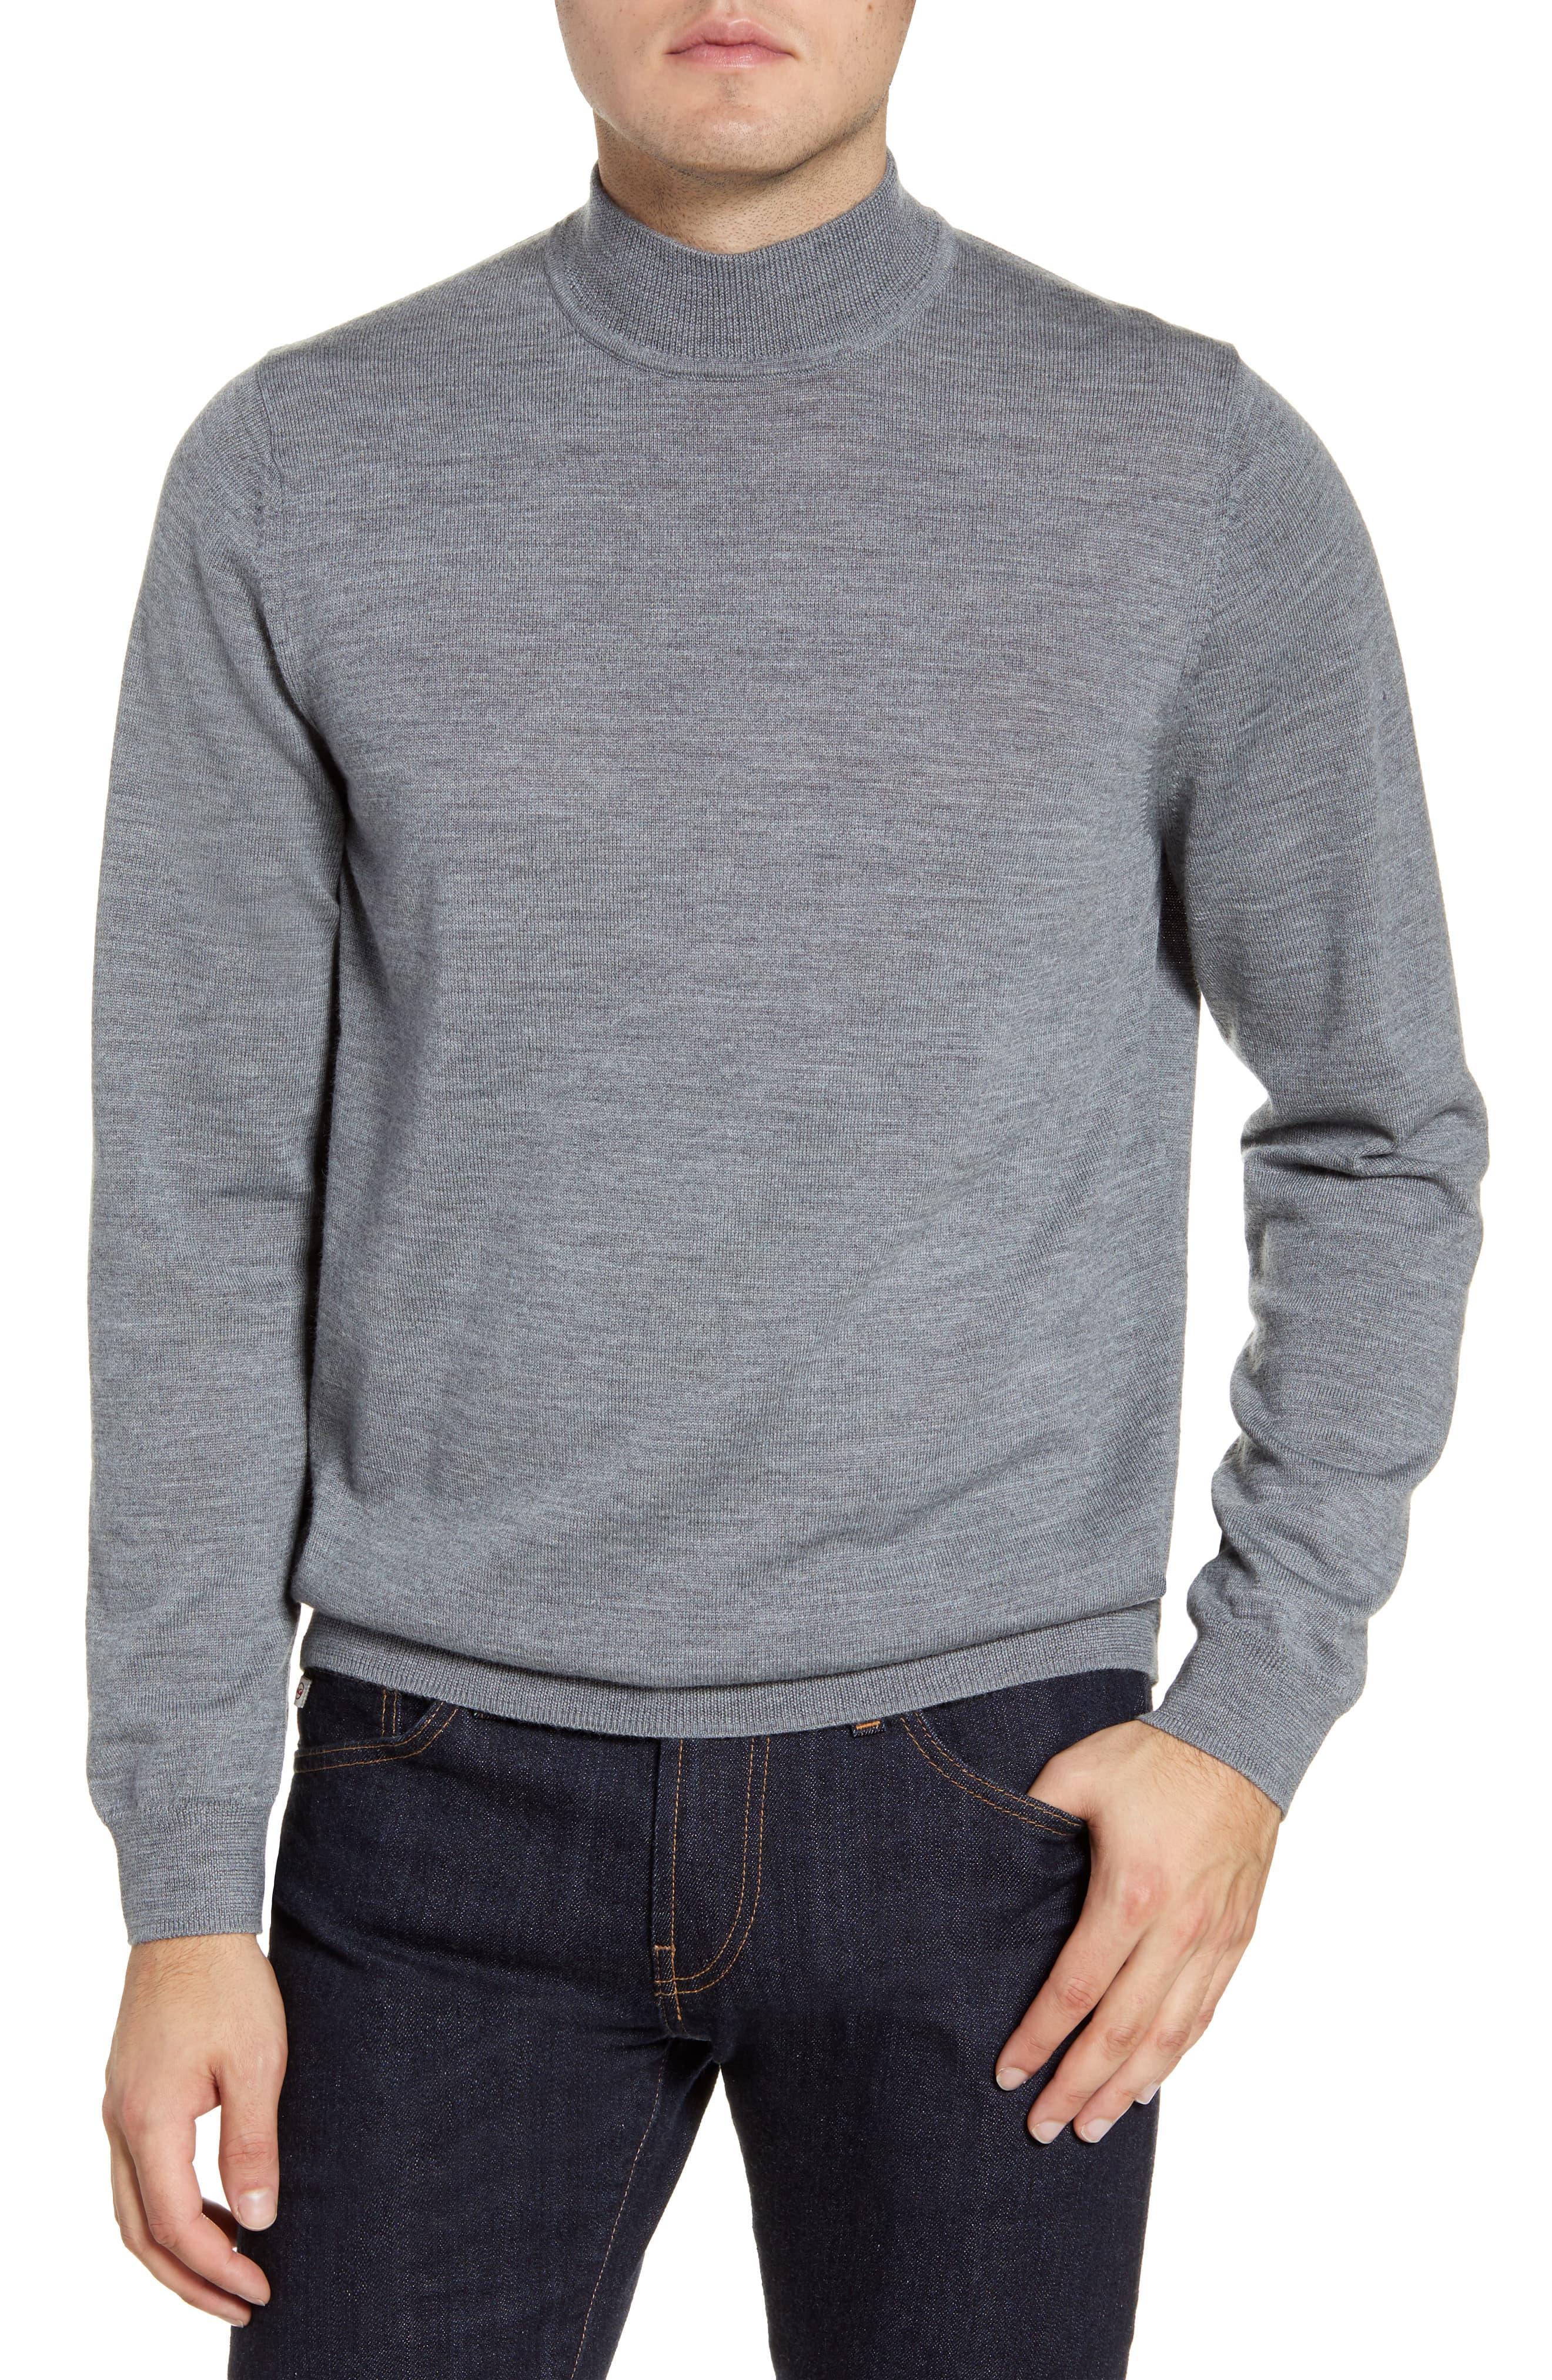 Nordstrom Mock Neck Merino Wool Sweater in Gray for Men - Lyst